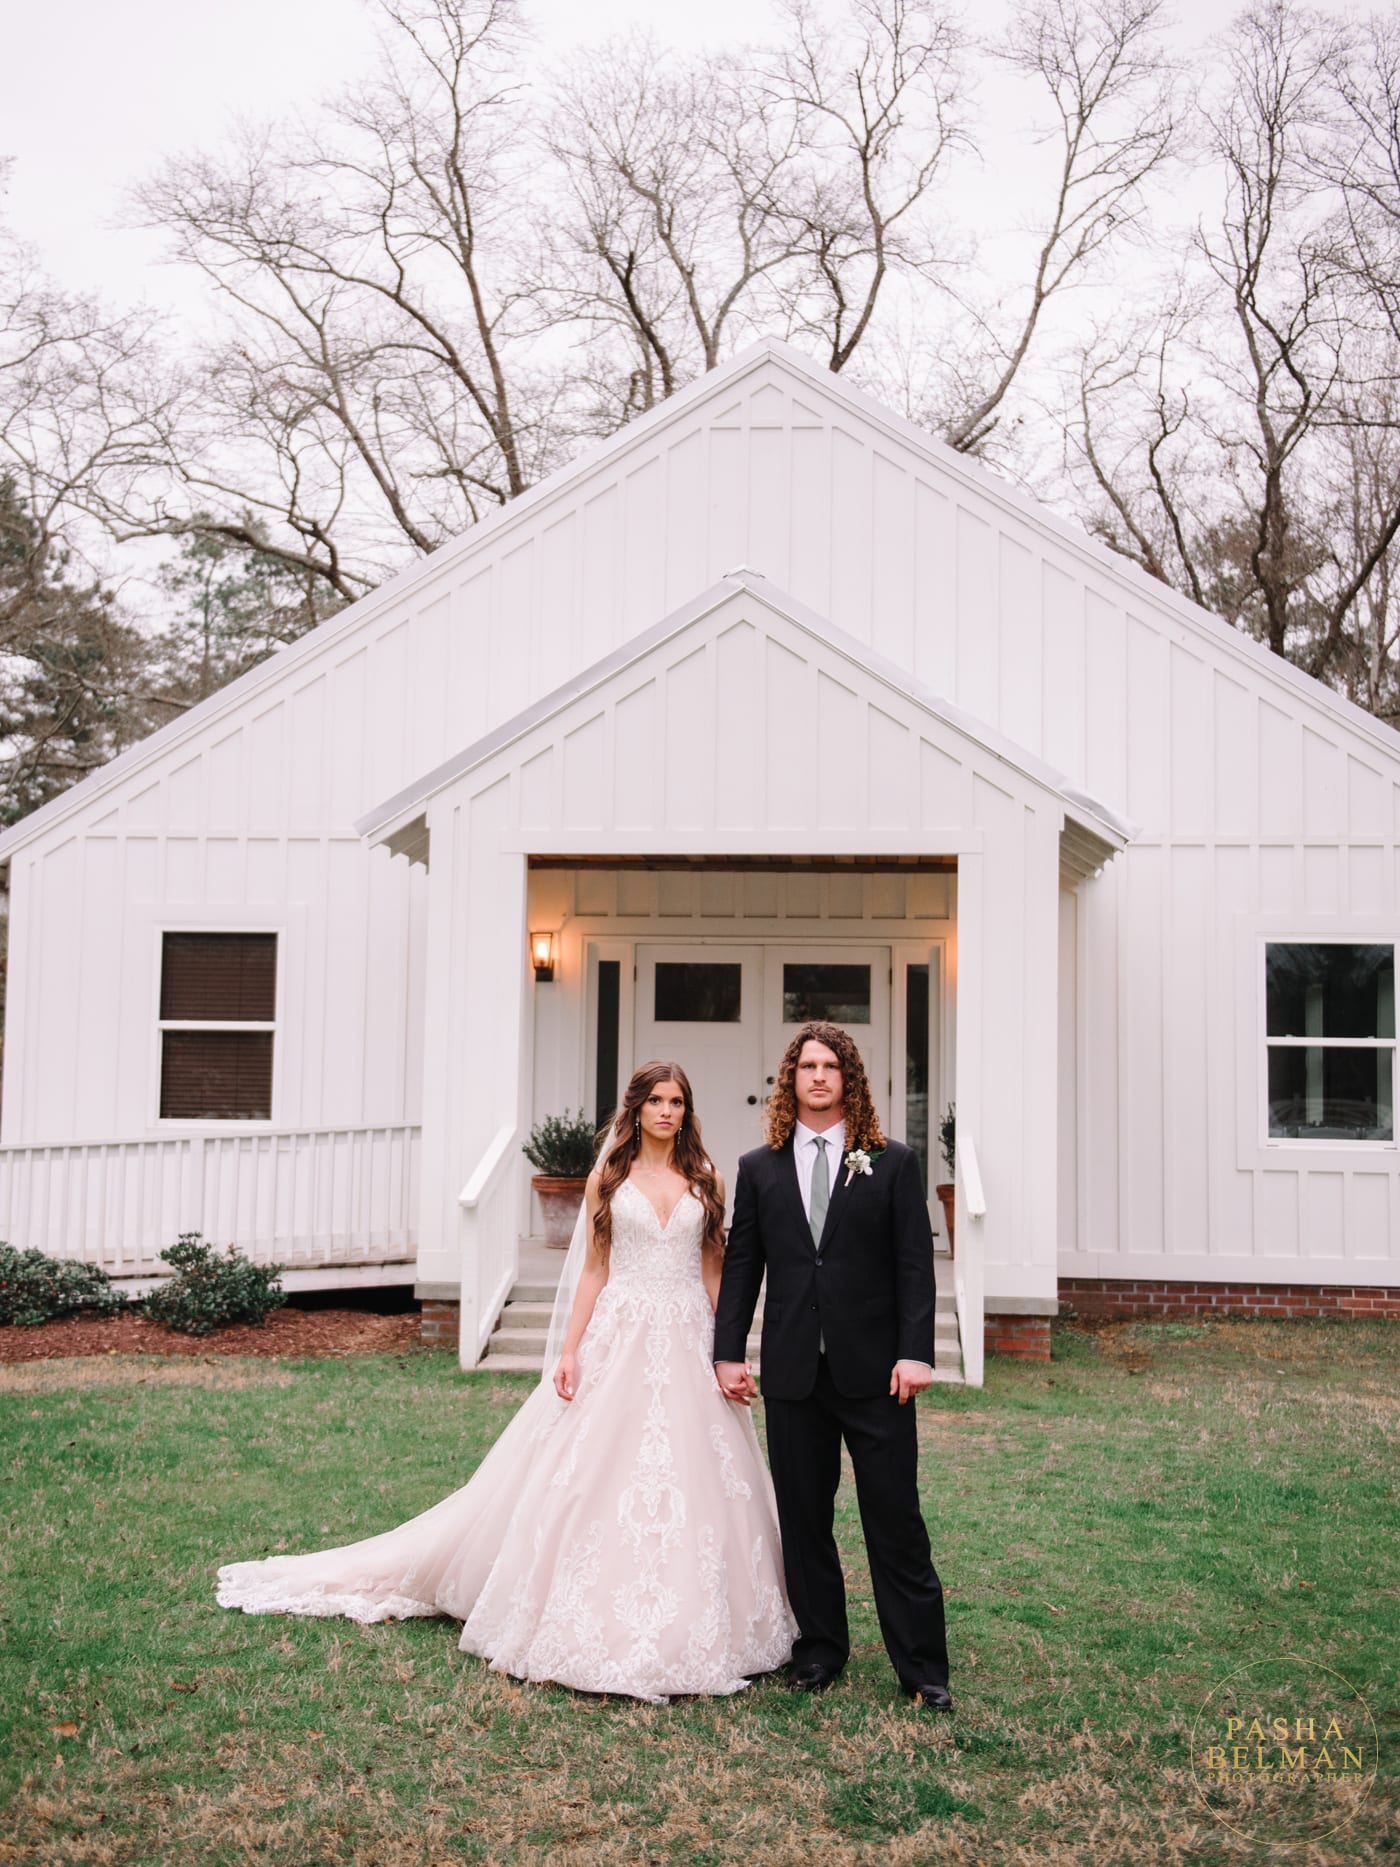 Wildberry Farm Wedding Photos in South Carolina